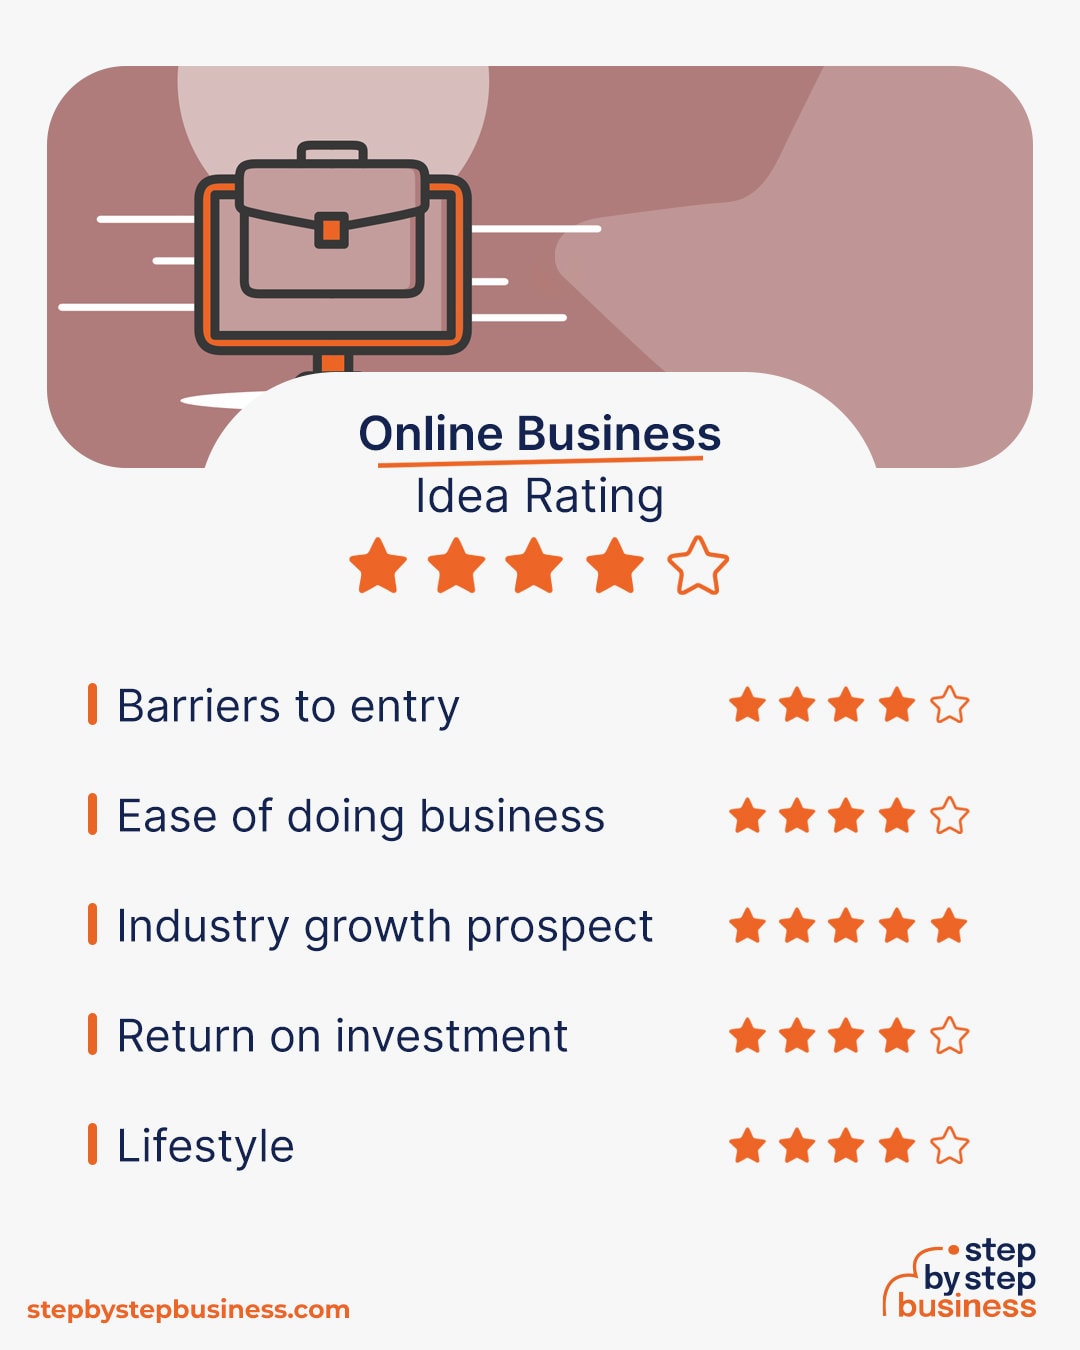 Online Business idea rating